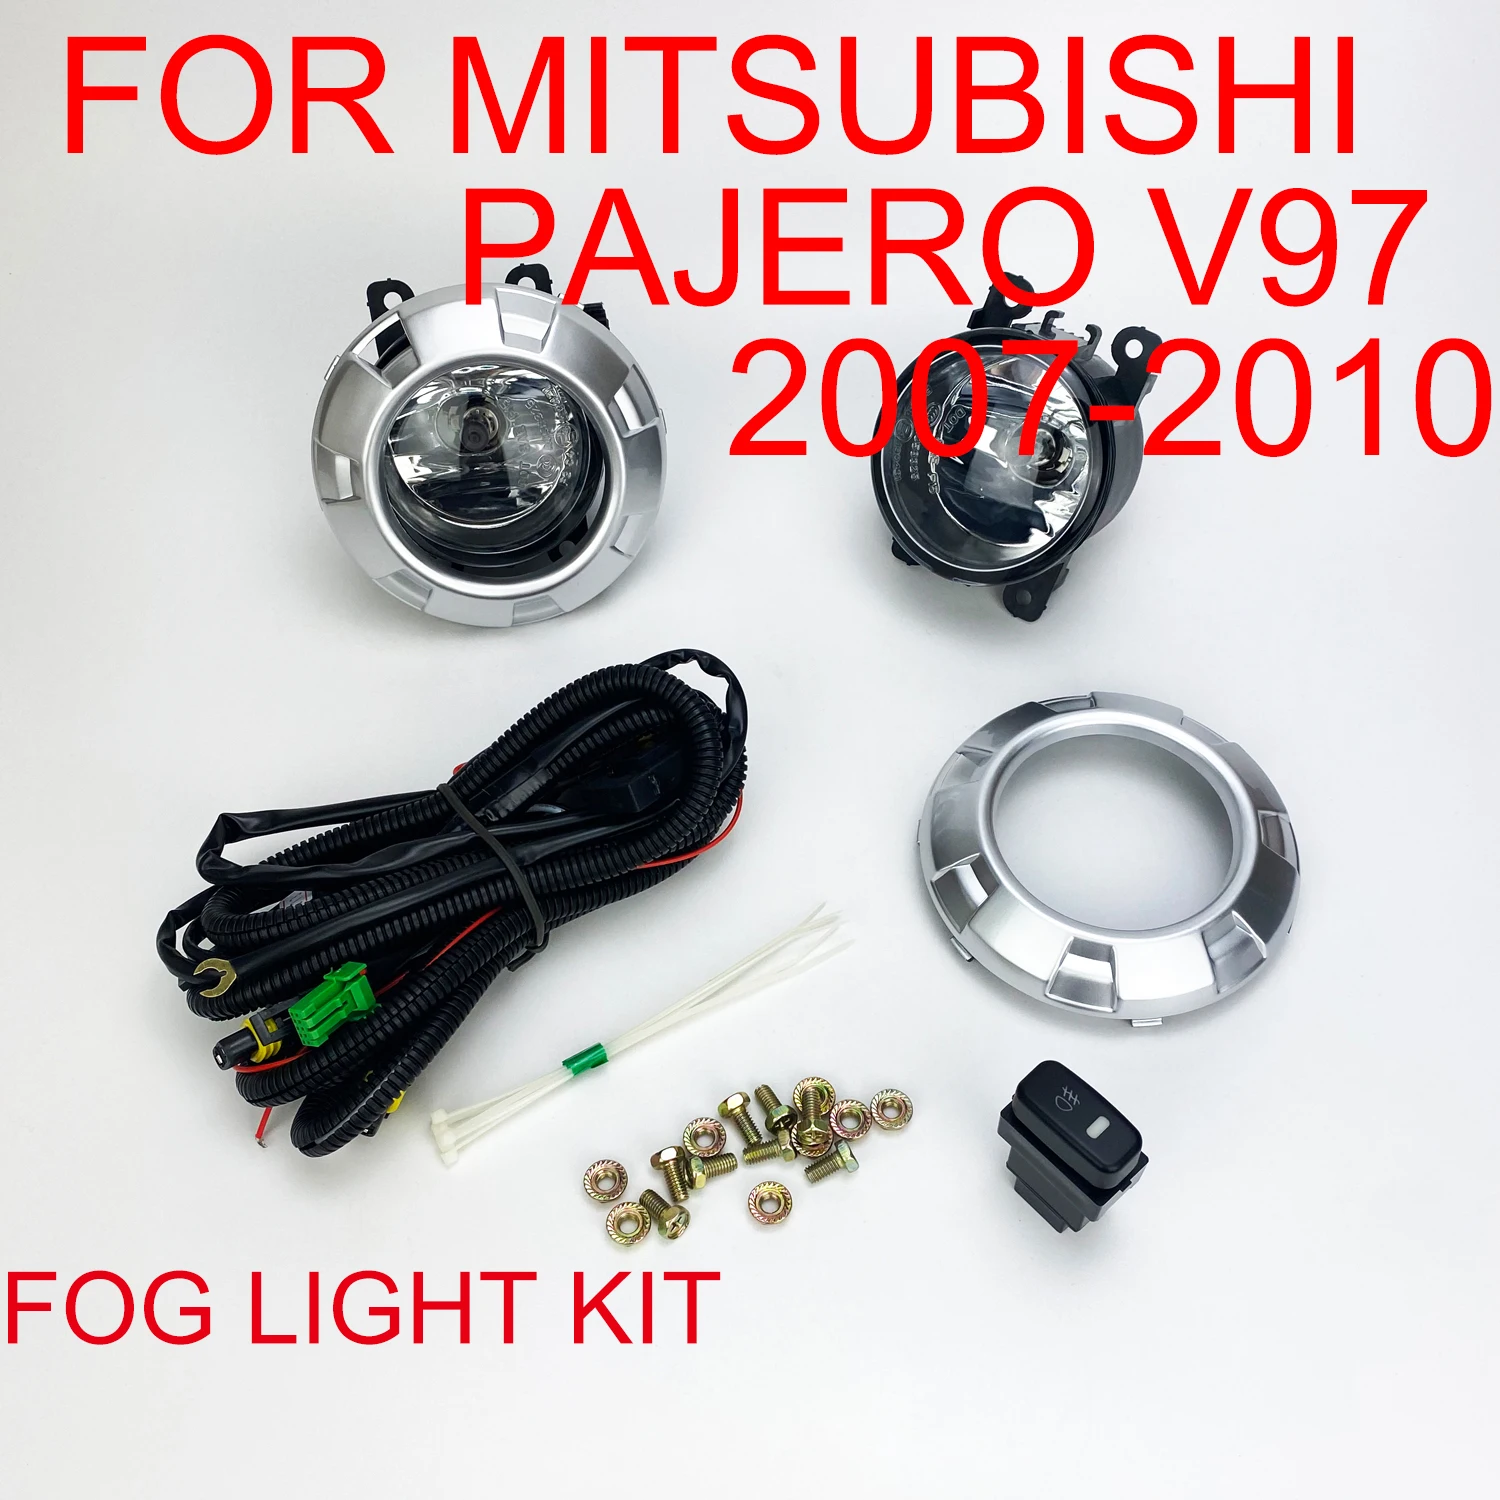 

Front Bumper Fog Light Kit For Mitsubishi Pajero V97 2007 2008 2009 2010 Replace Or Upgrade Passenger + Driver Side Clear Lens